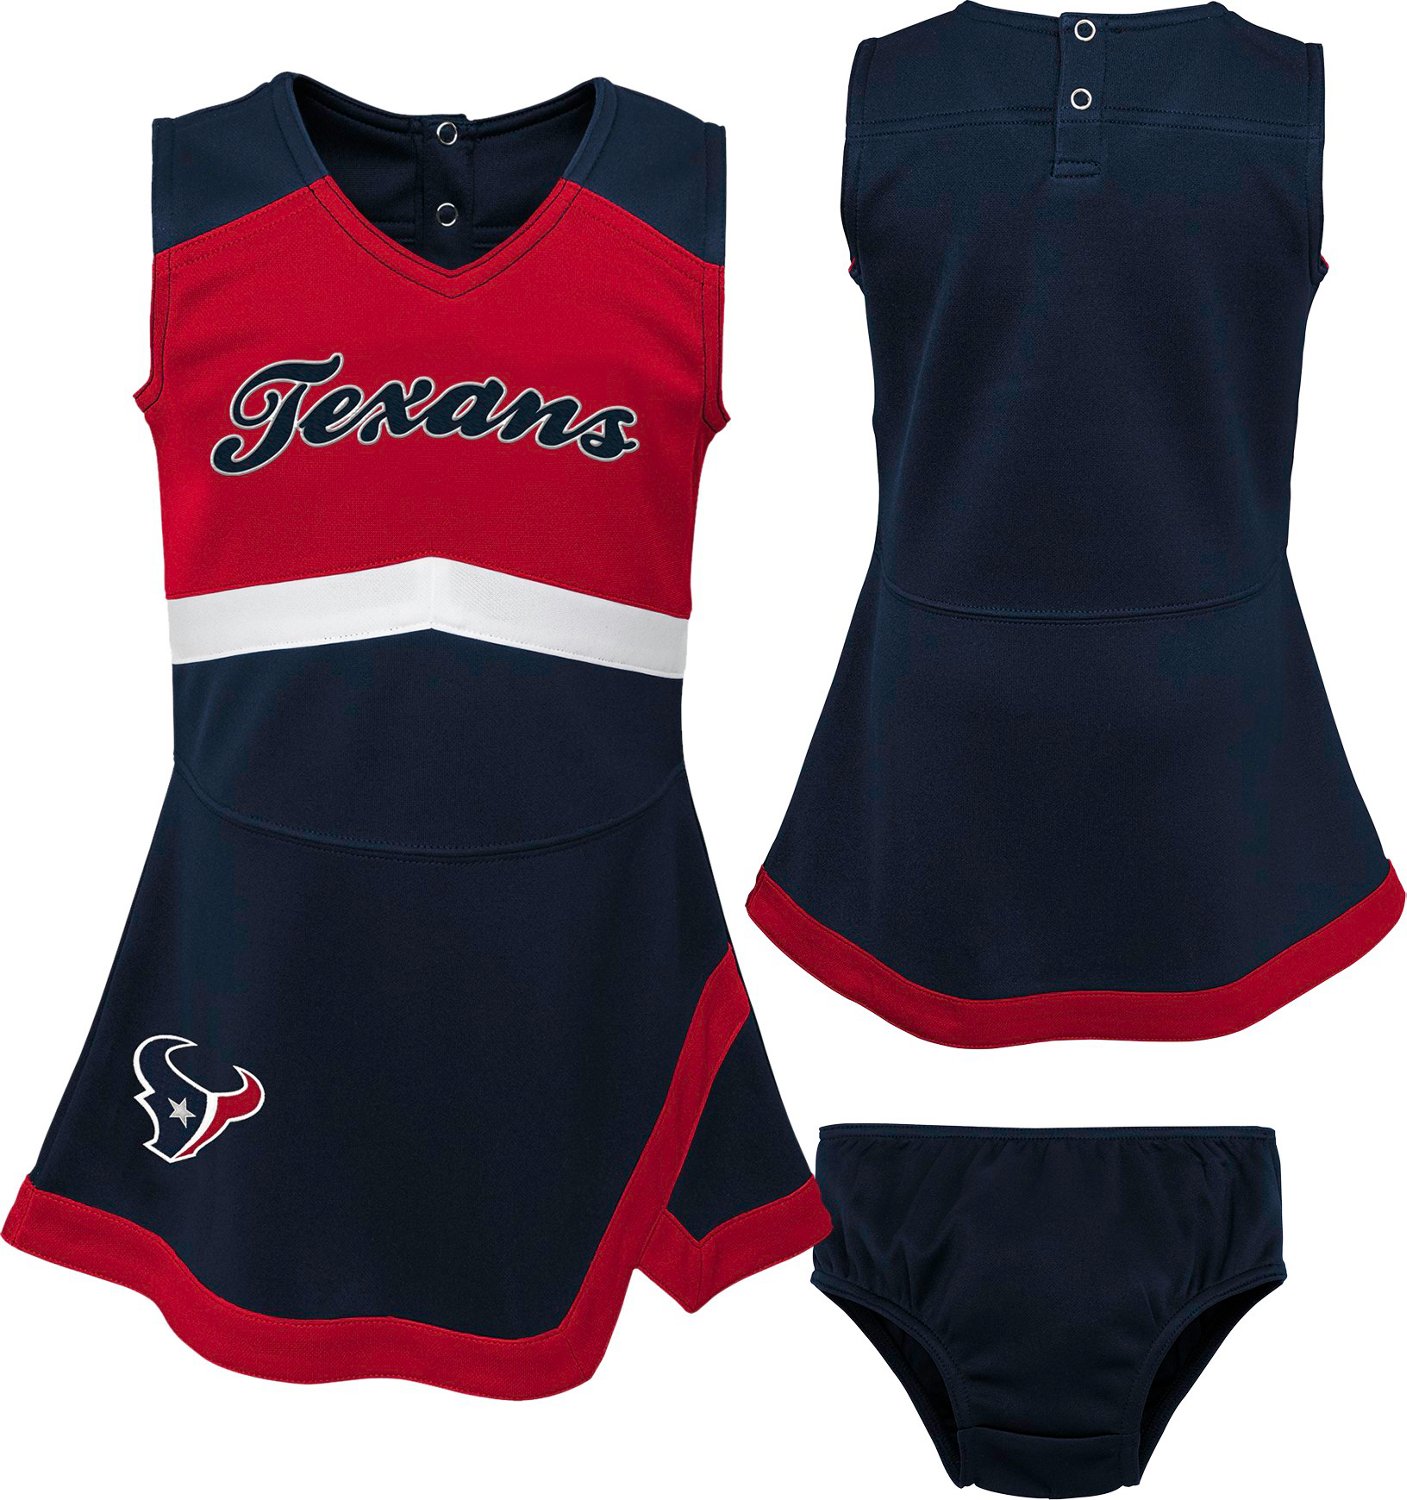 Nike Texas Rangers Girls 4t Cheer Uniform Baseball Outfit